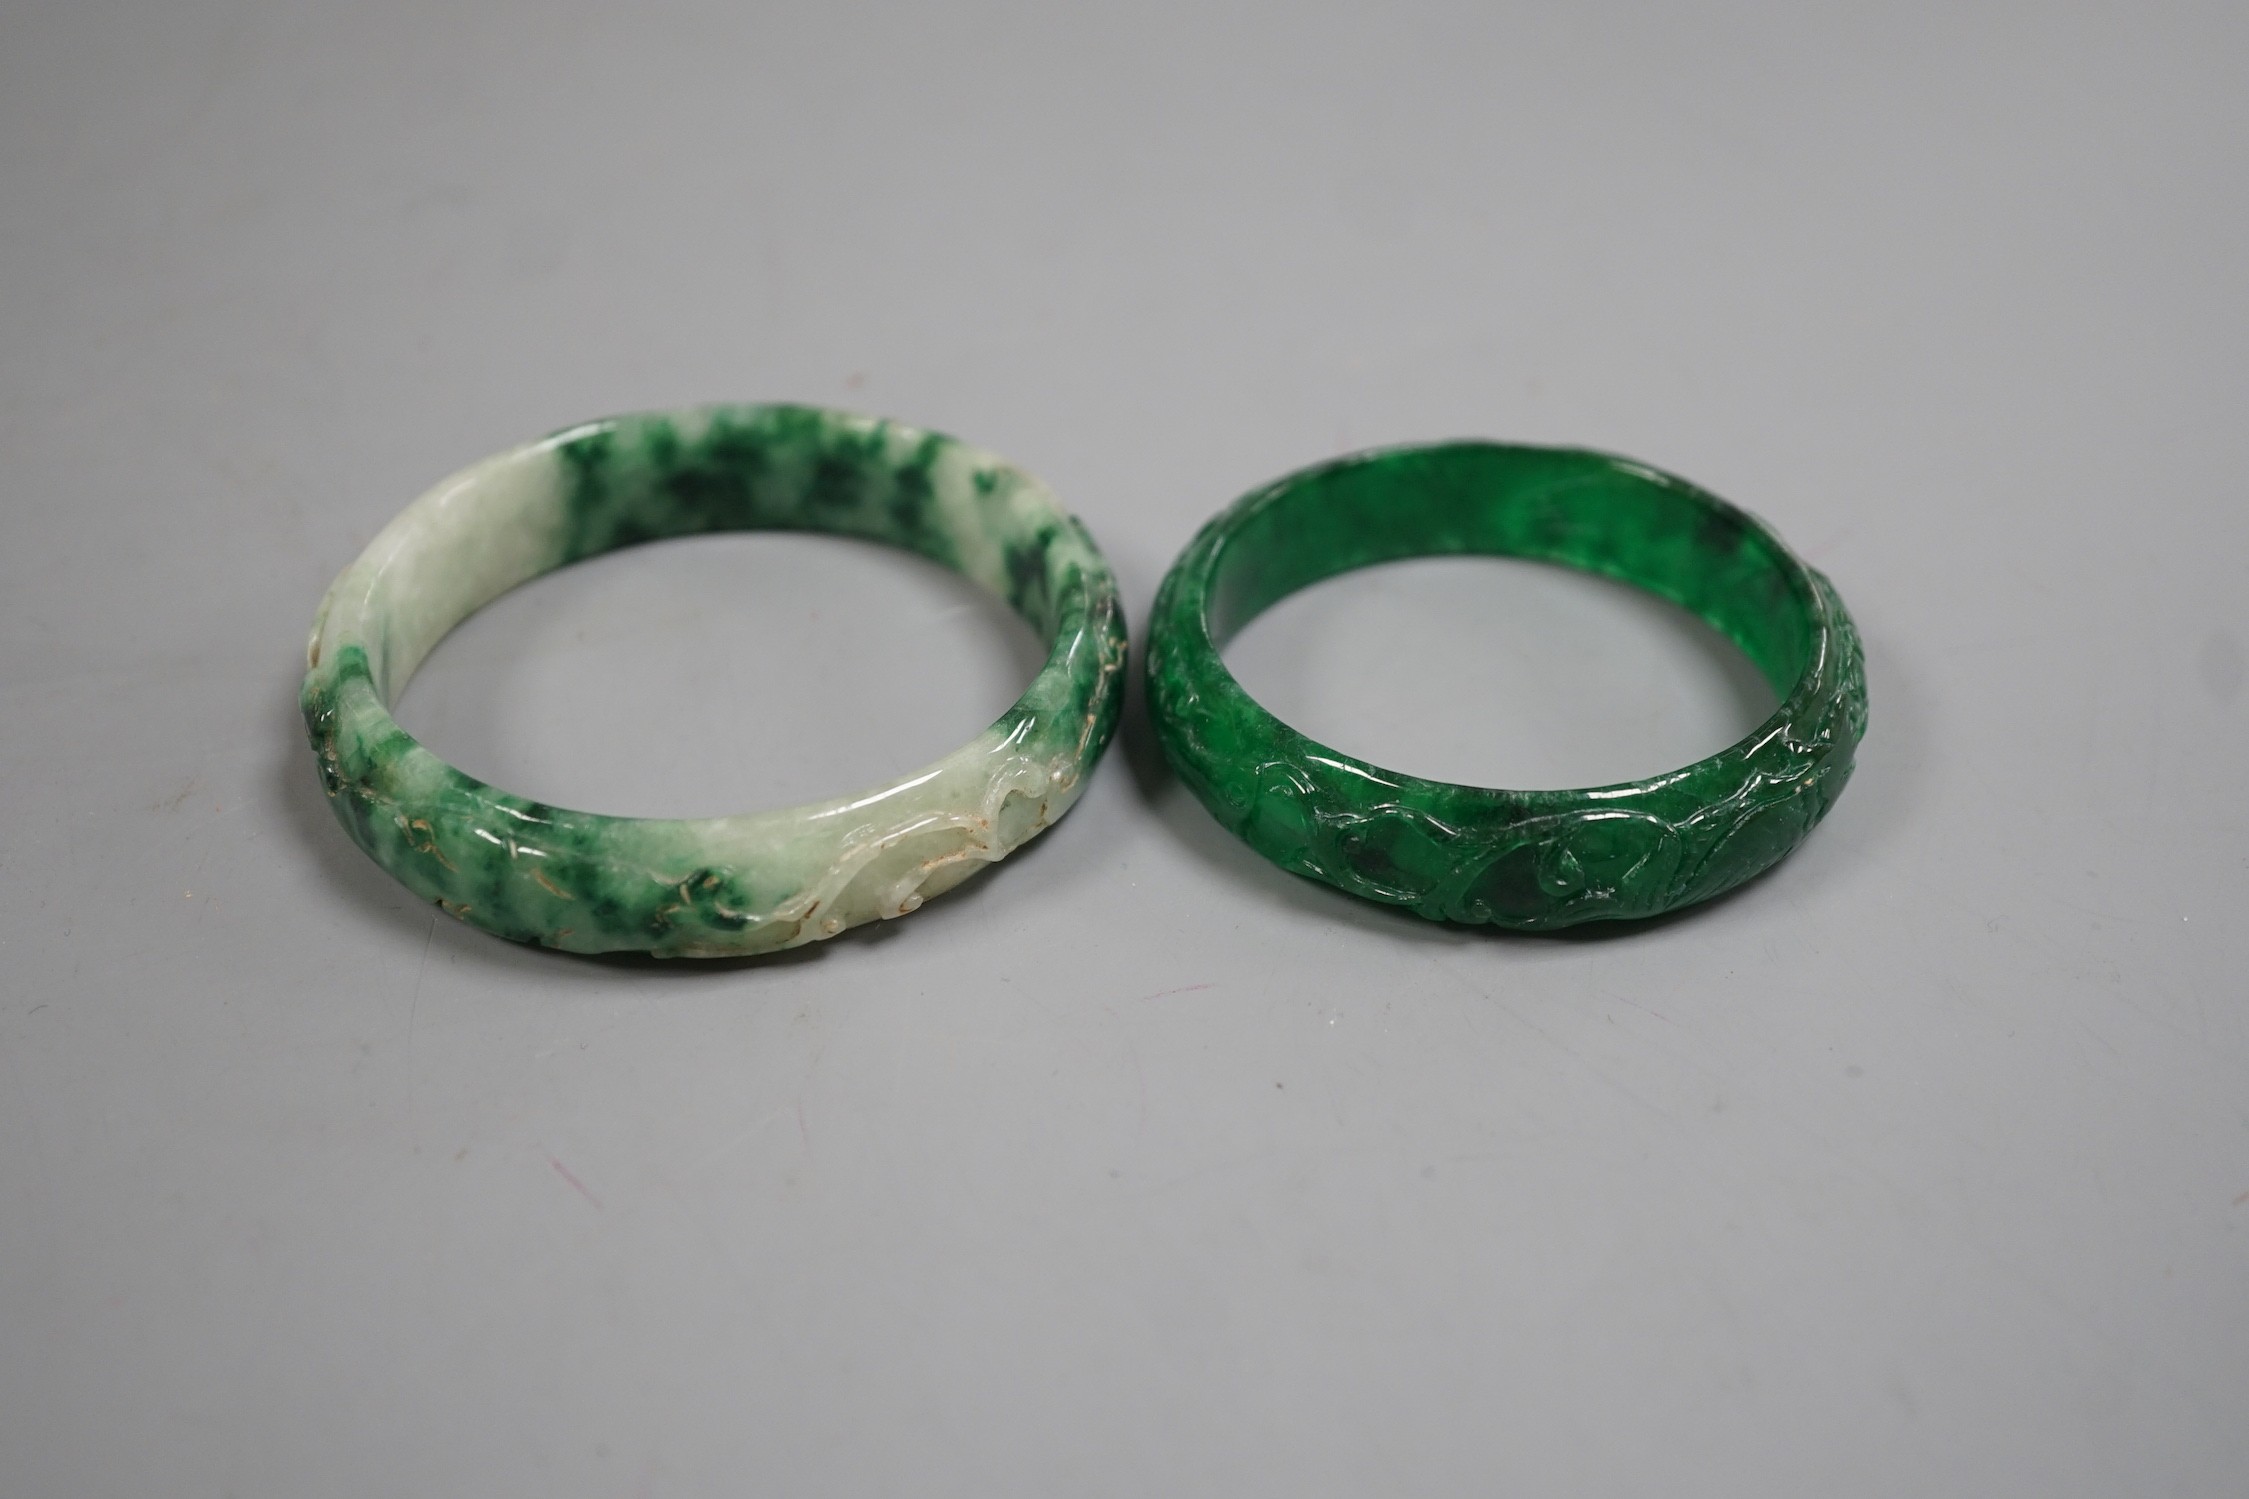 Two Chinese jadeite bangles - Image 3 of 3